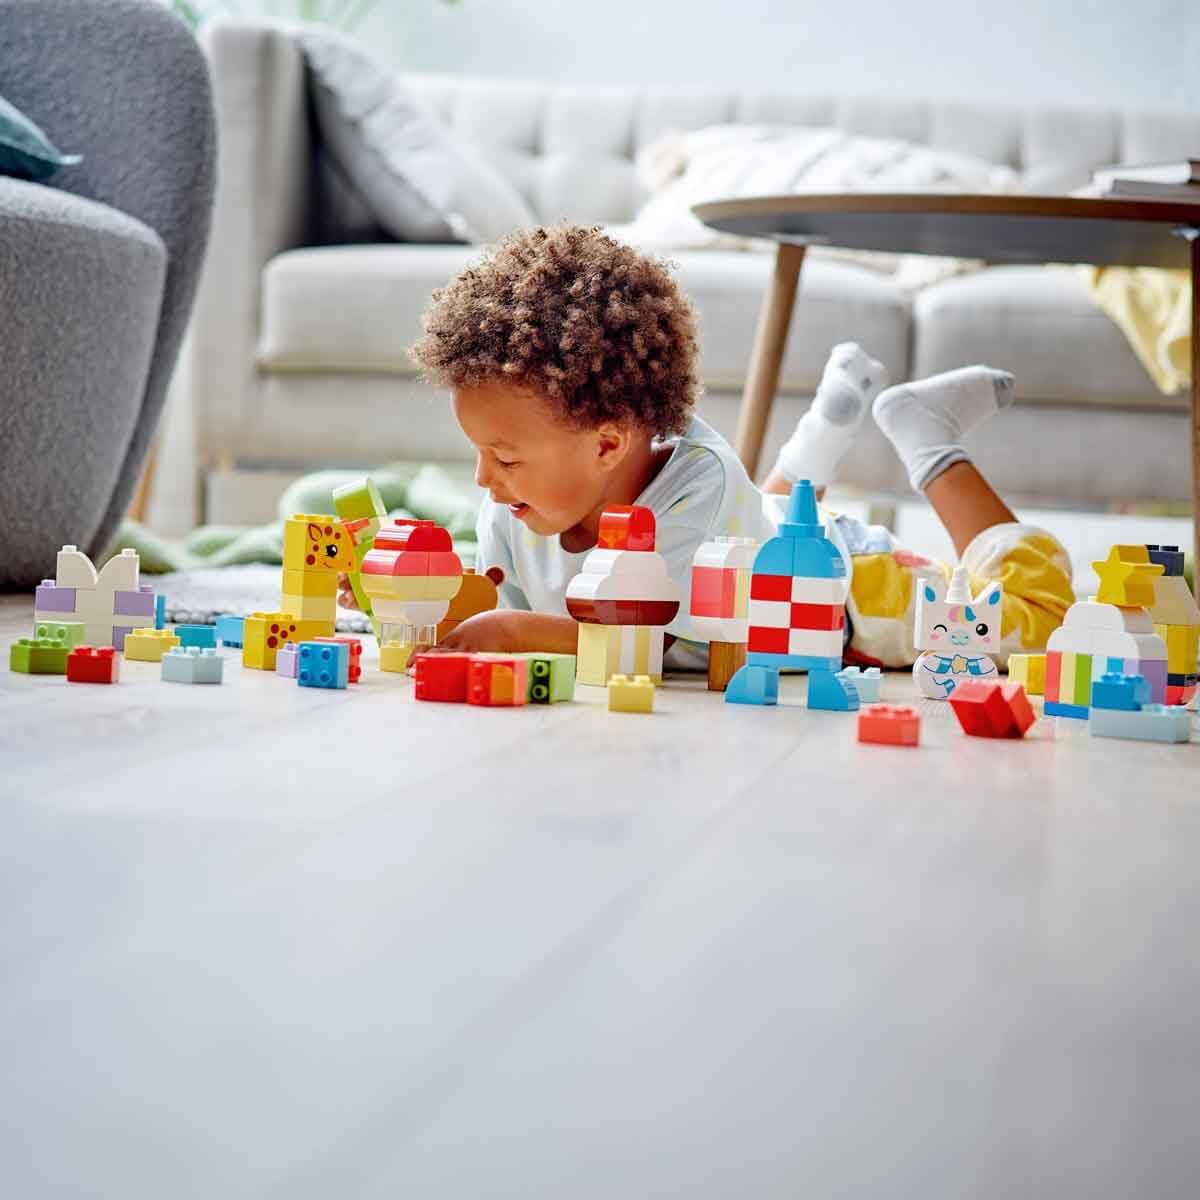 LEGO Duplo Creative Building Time 10978 Construction Toy (120 Pieces),Multi